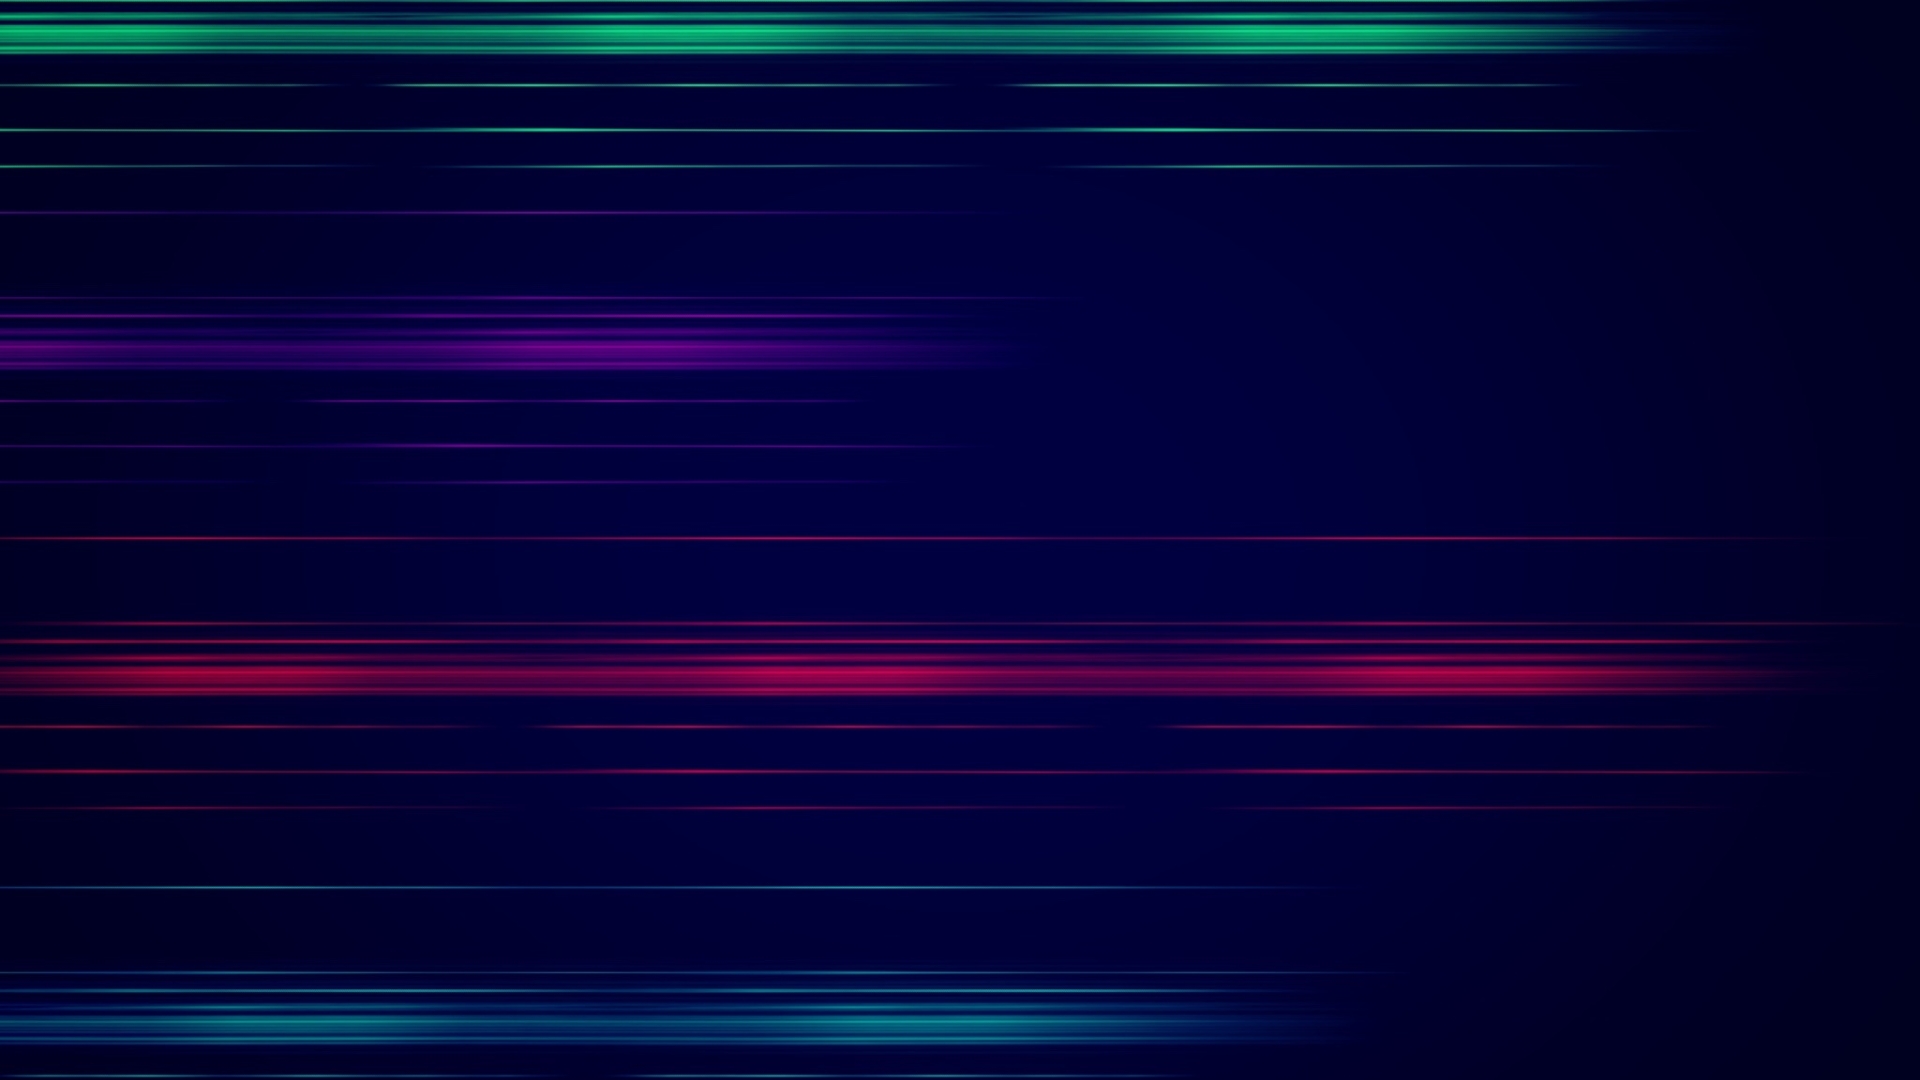 blurred lines download